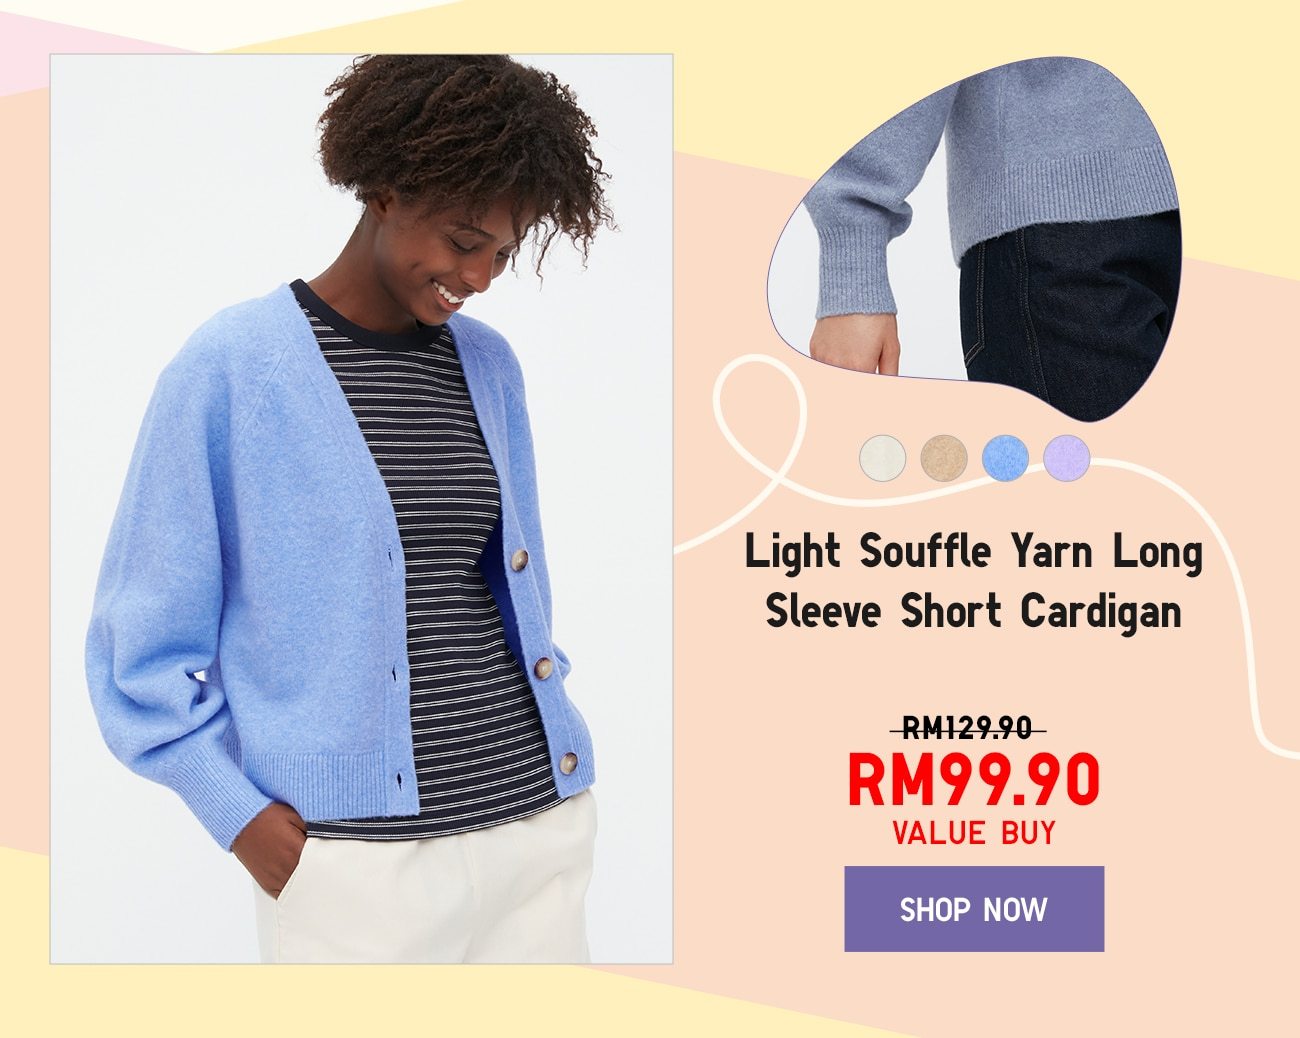 Light Souffle Yarn Long Sleeve Short Cardigan